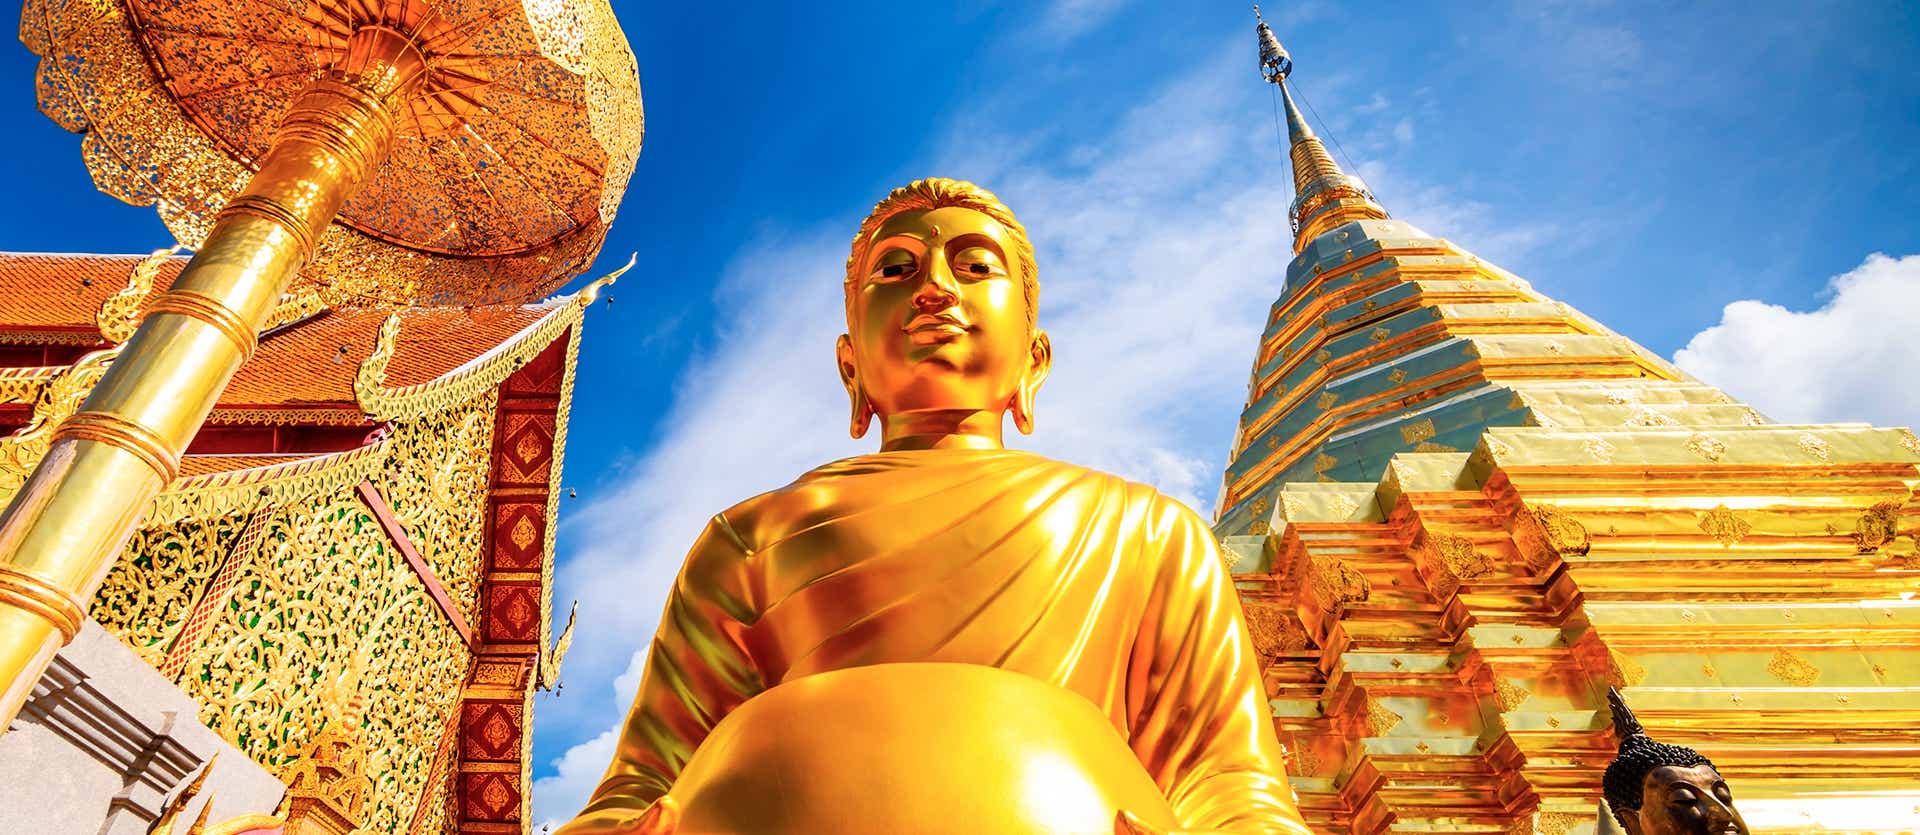 Wat Phra That Doi Suthep Temple <span class="iconos separador"></span> Chiang Mai